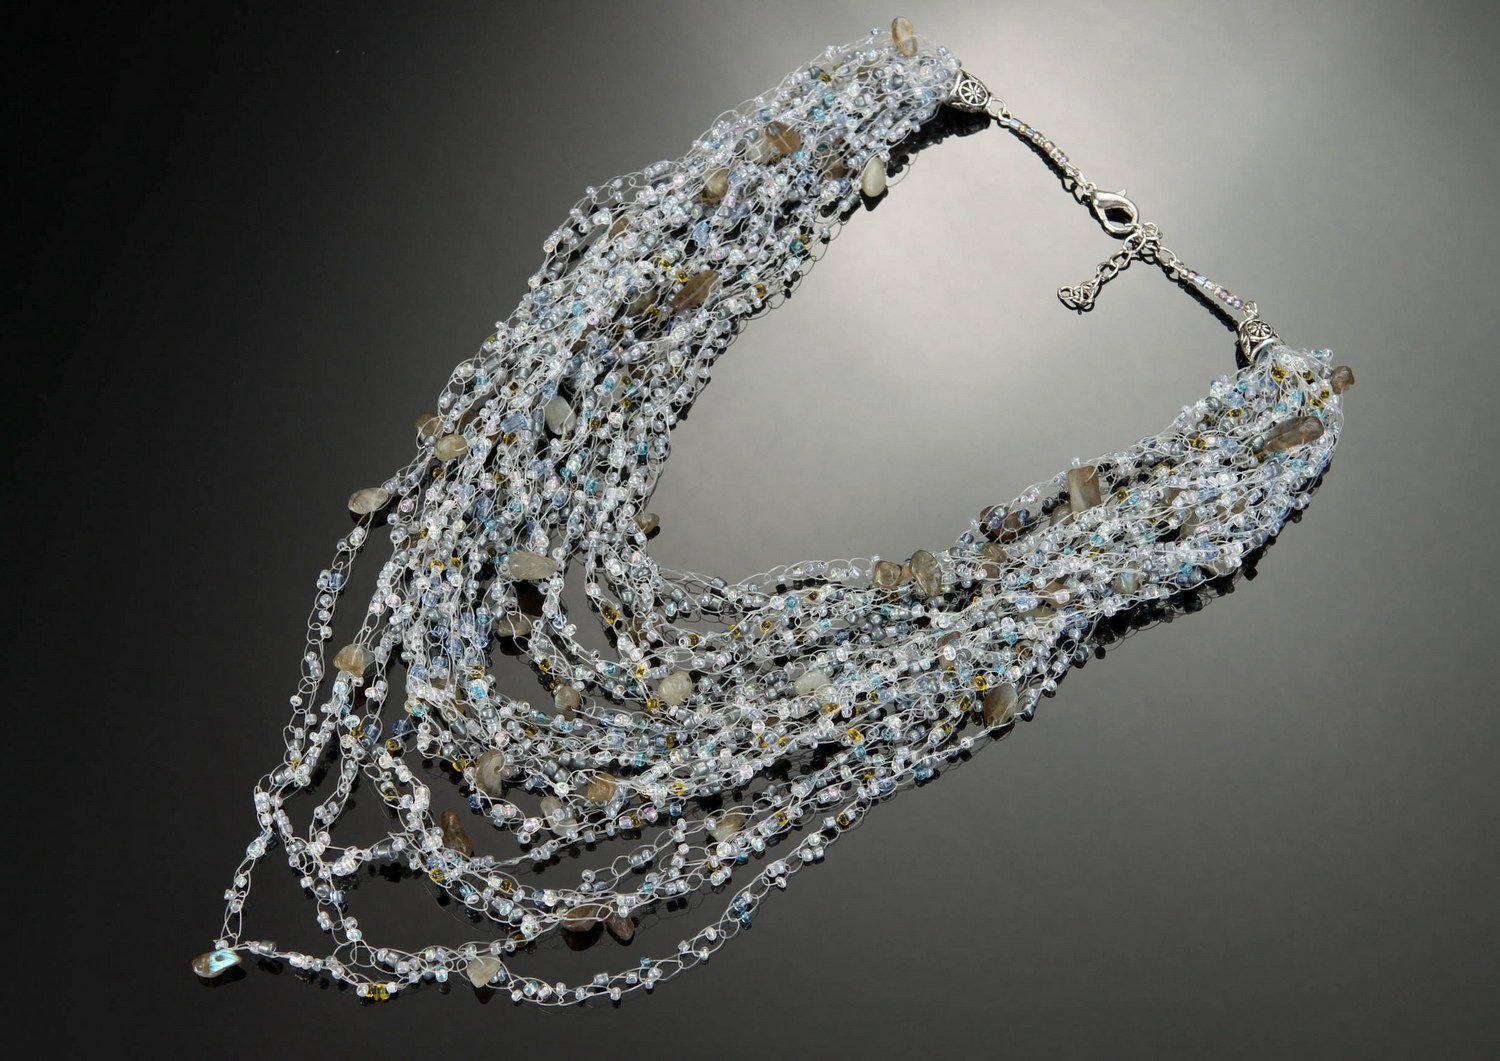 Necklace made of labradorite fragments photo 1